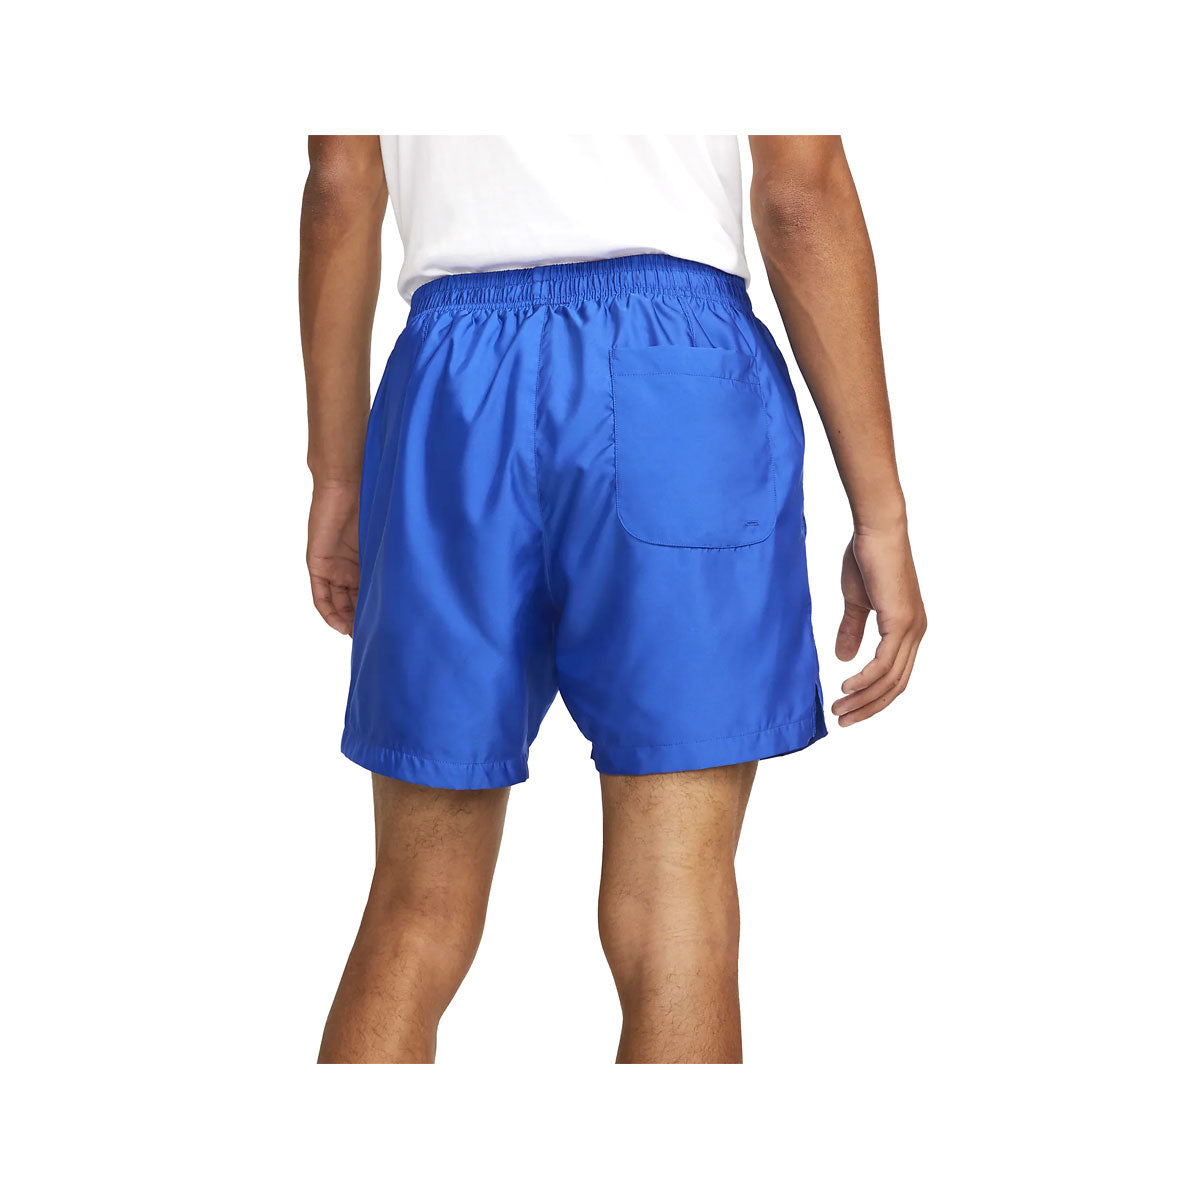 Nike Men's Sportswear Woven Shorts - KickzStore